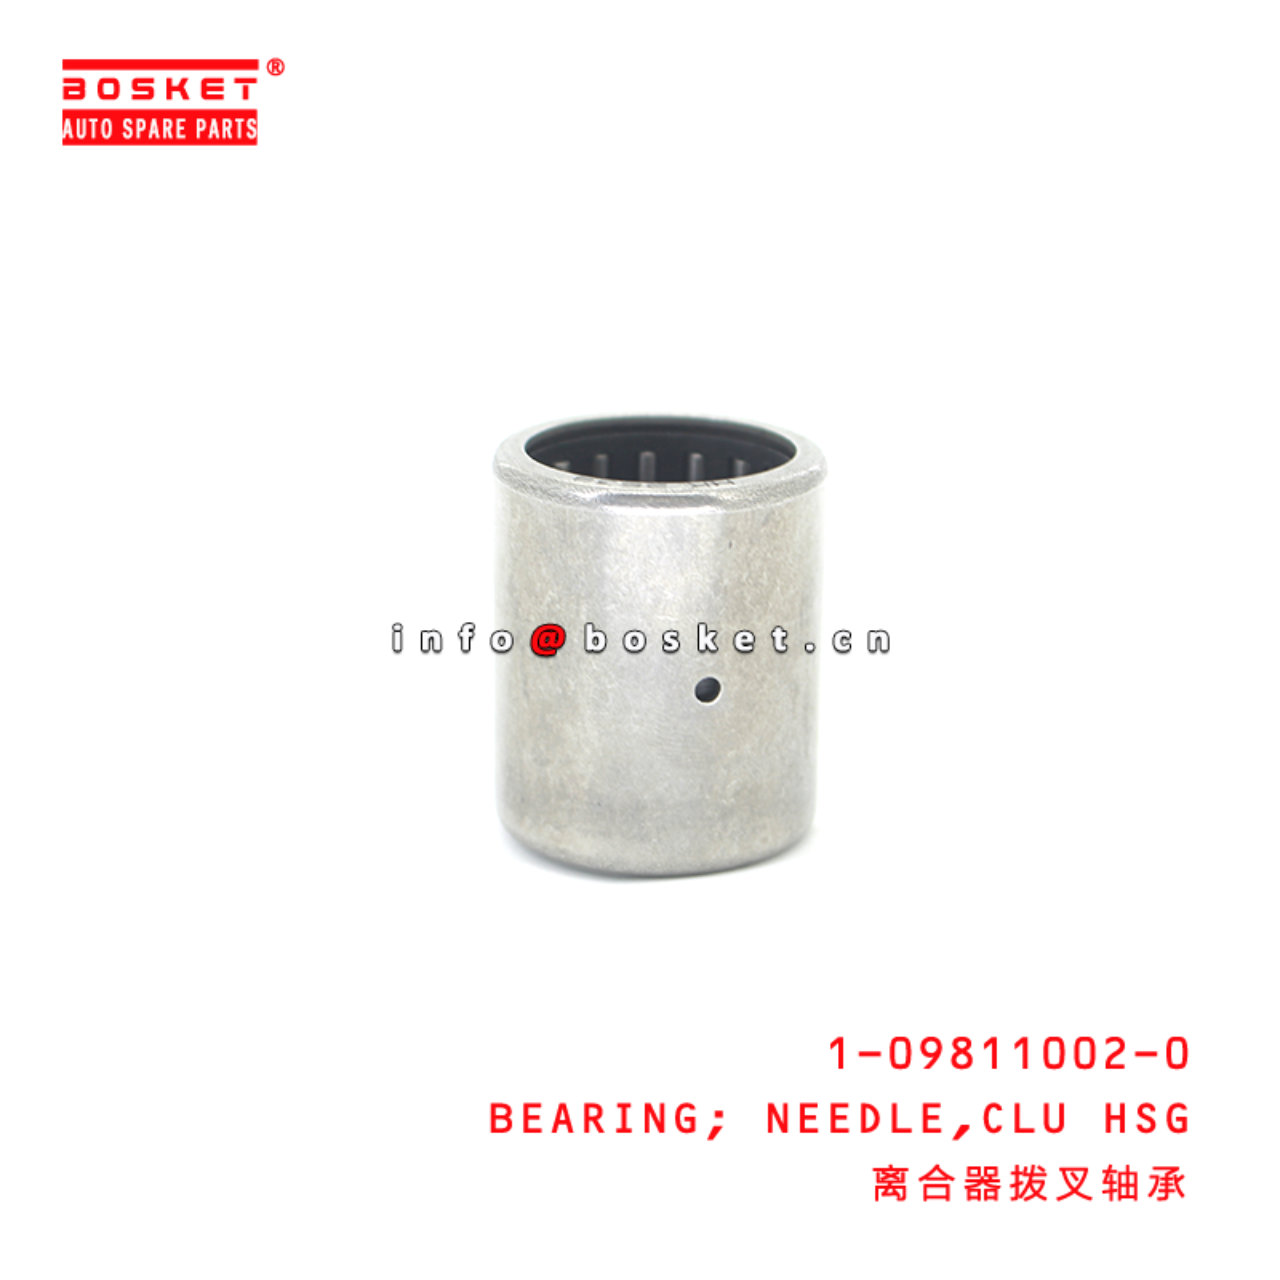 1-09811002-0 Clutch Housing Needle Bearing Suitable for ISUZU ELF 4HK1 1098110020